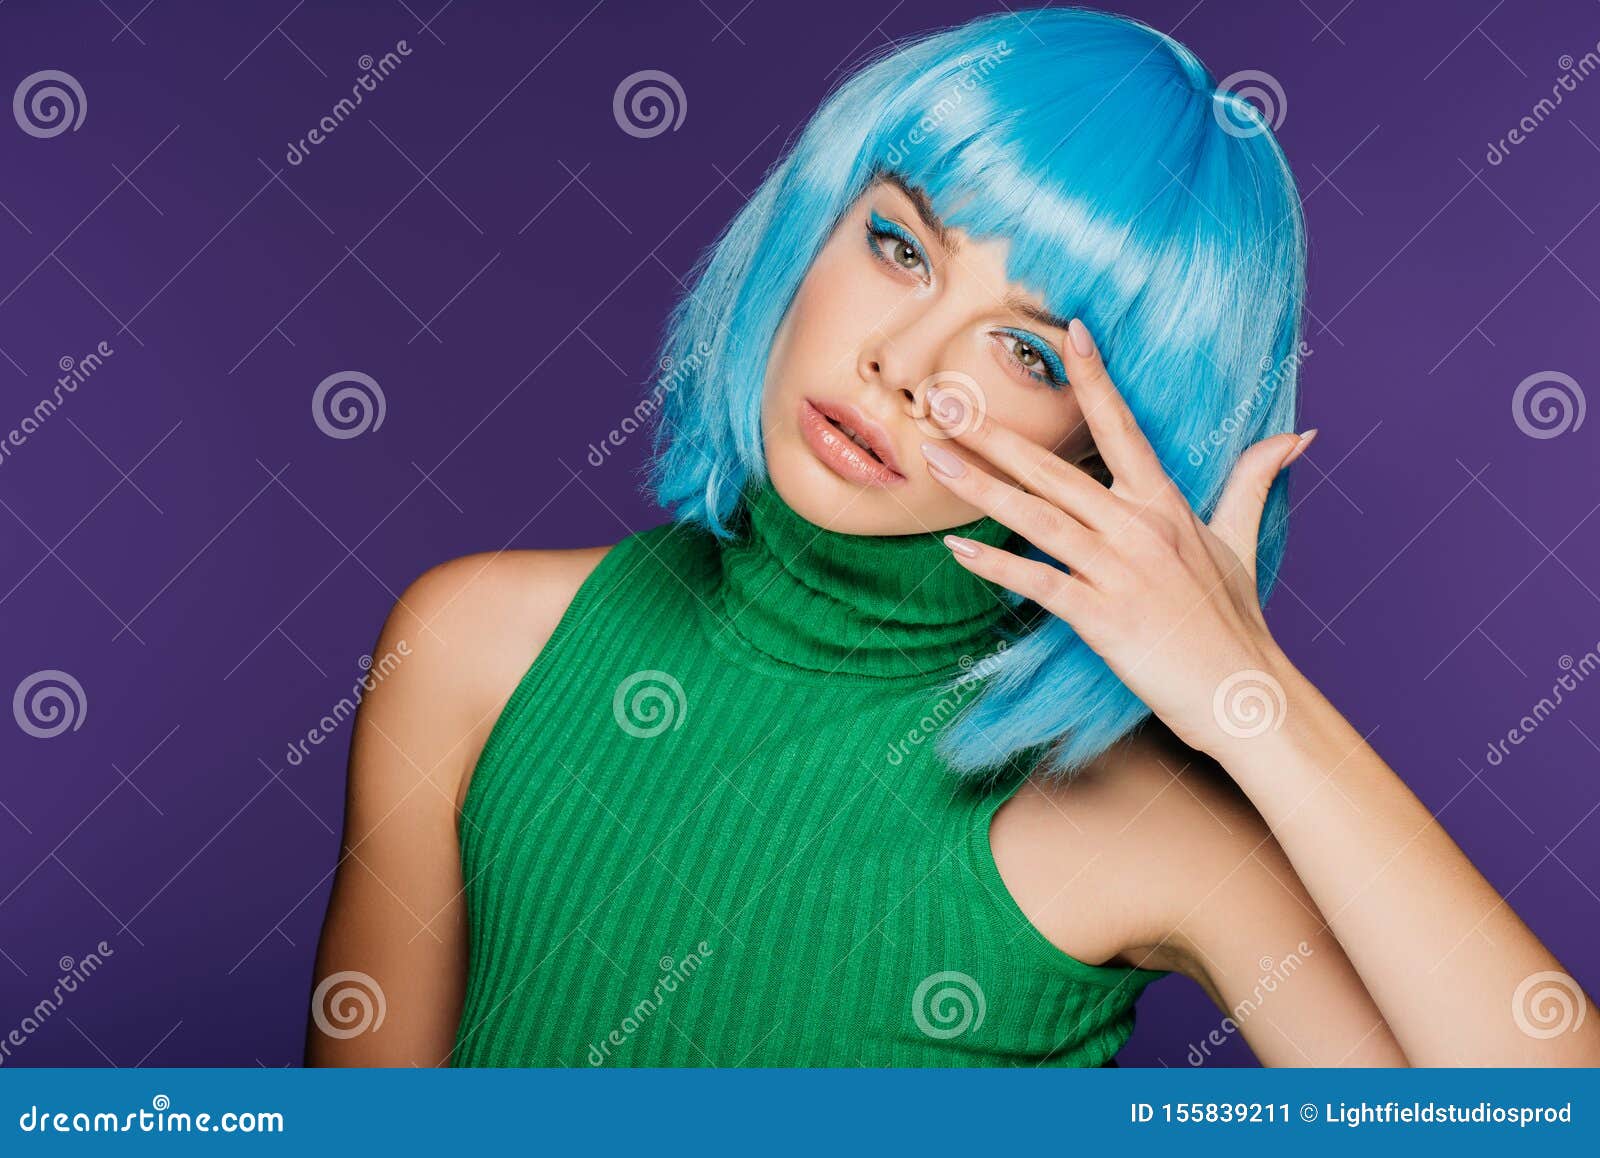 6. Picka Girl Blue Hair - Tumblr - wide 1